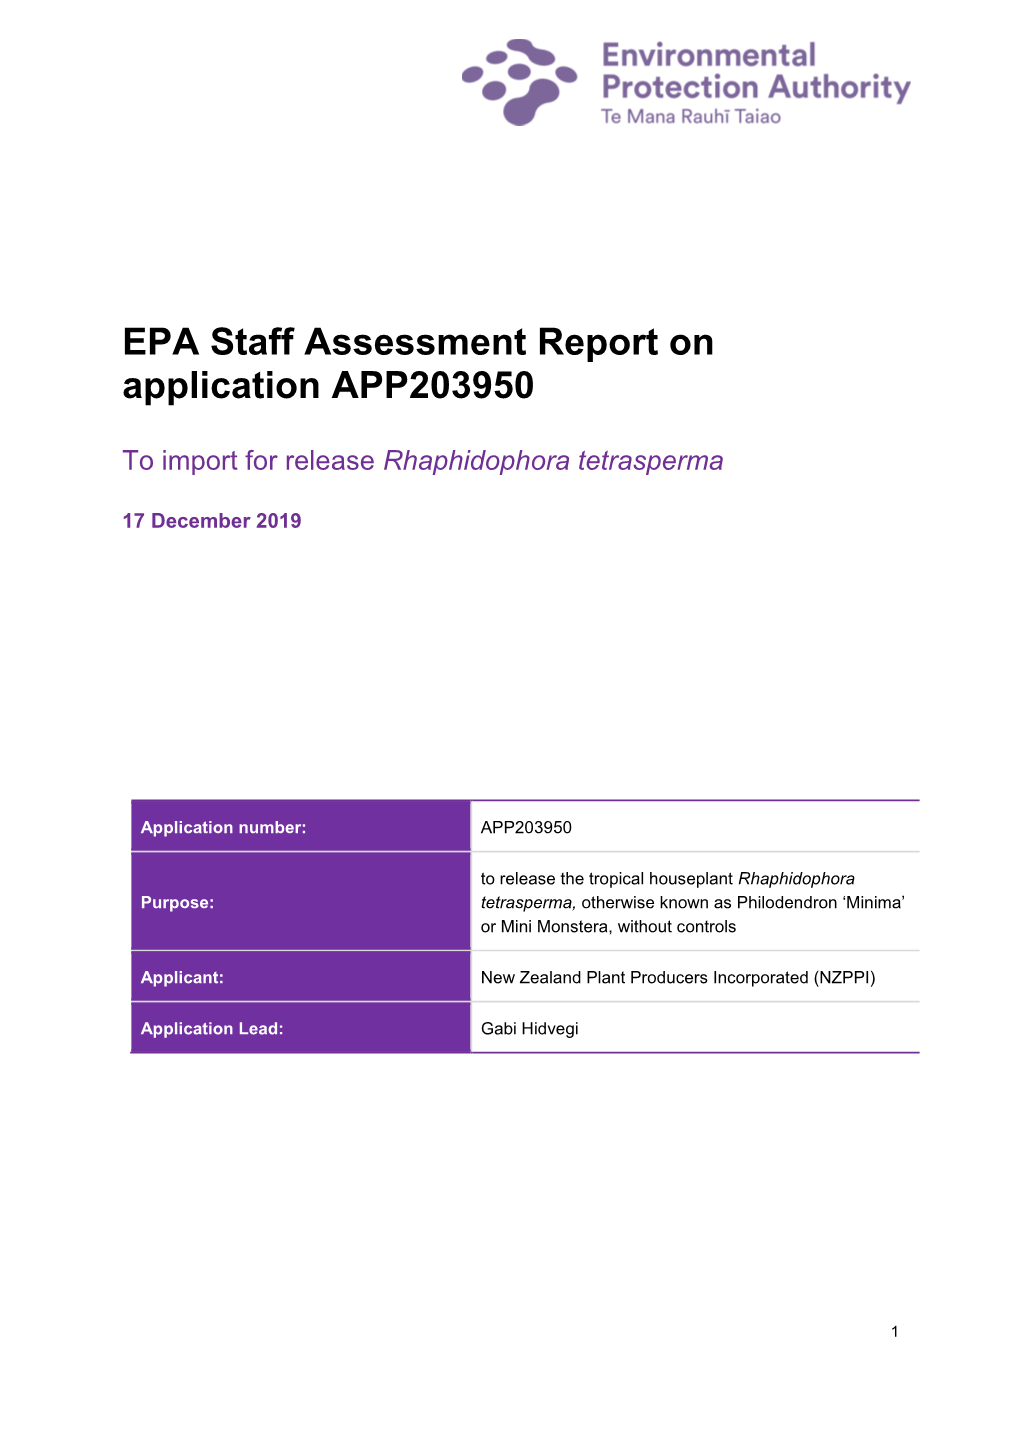 EPA Staff Assessment Report on Application APP203950